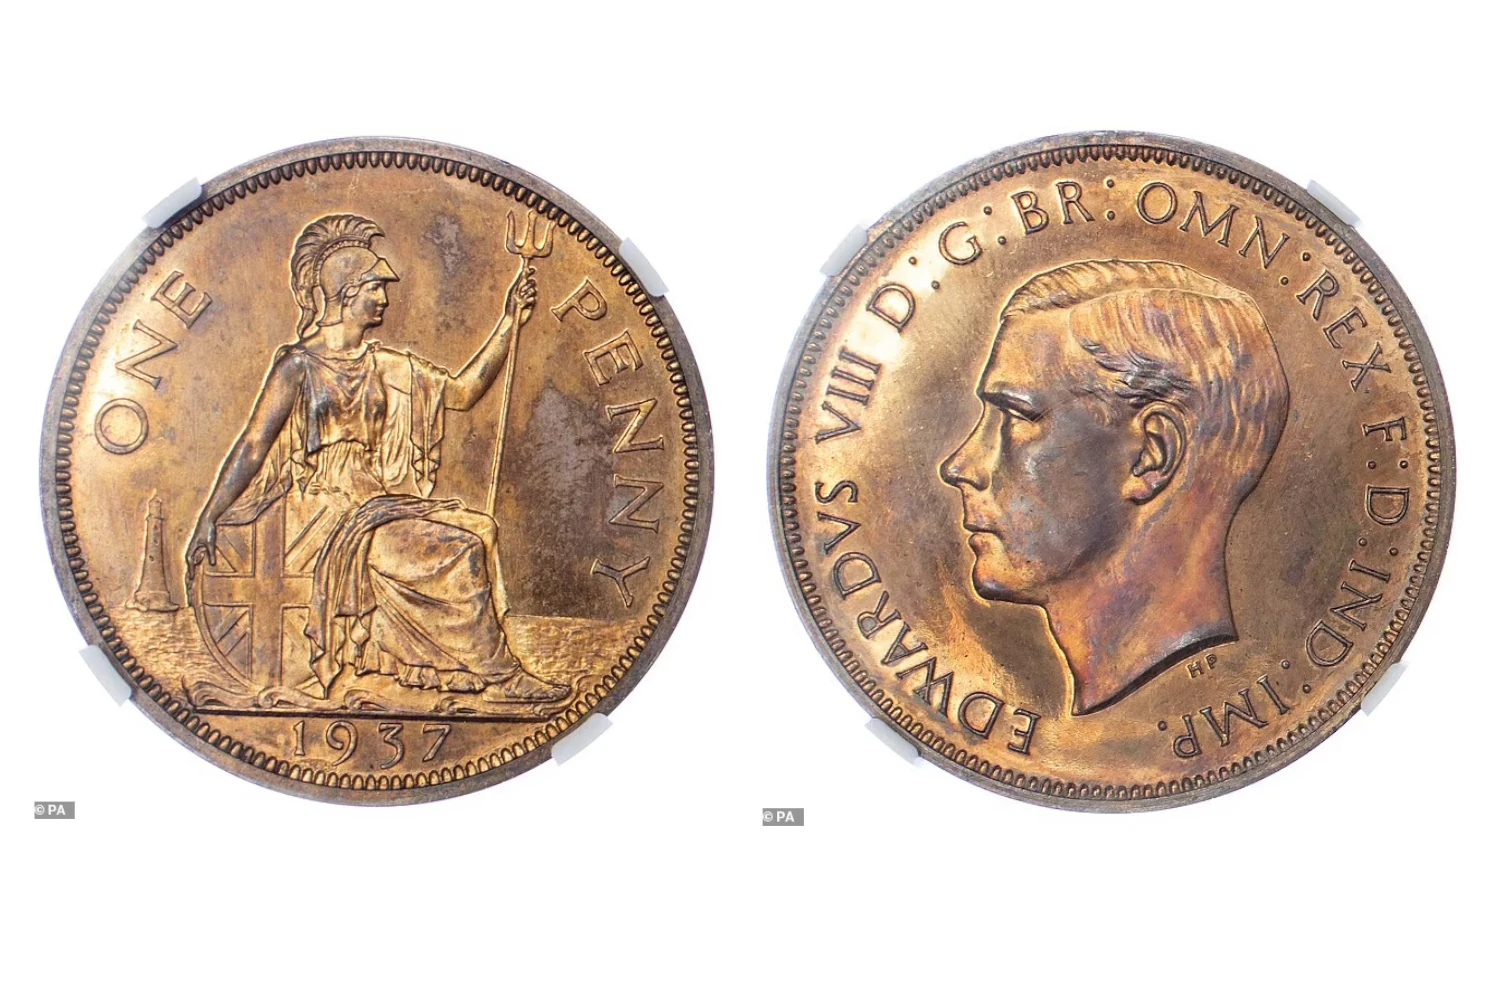 1937 King Edward VIII Penny